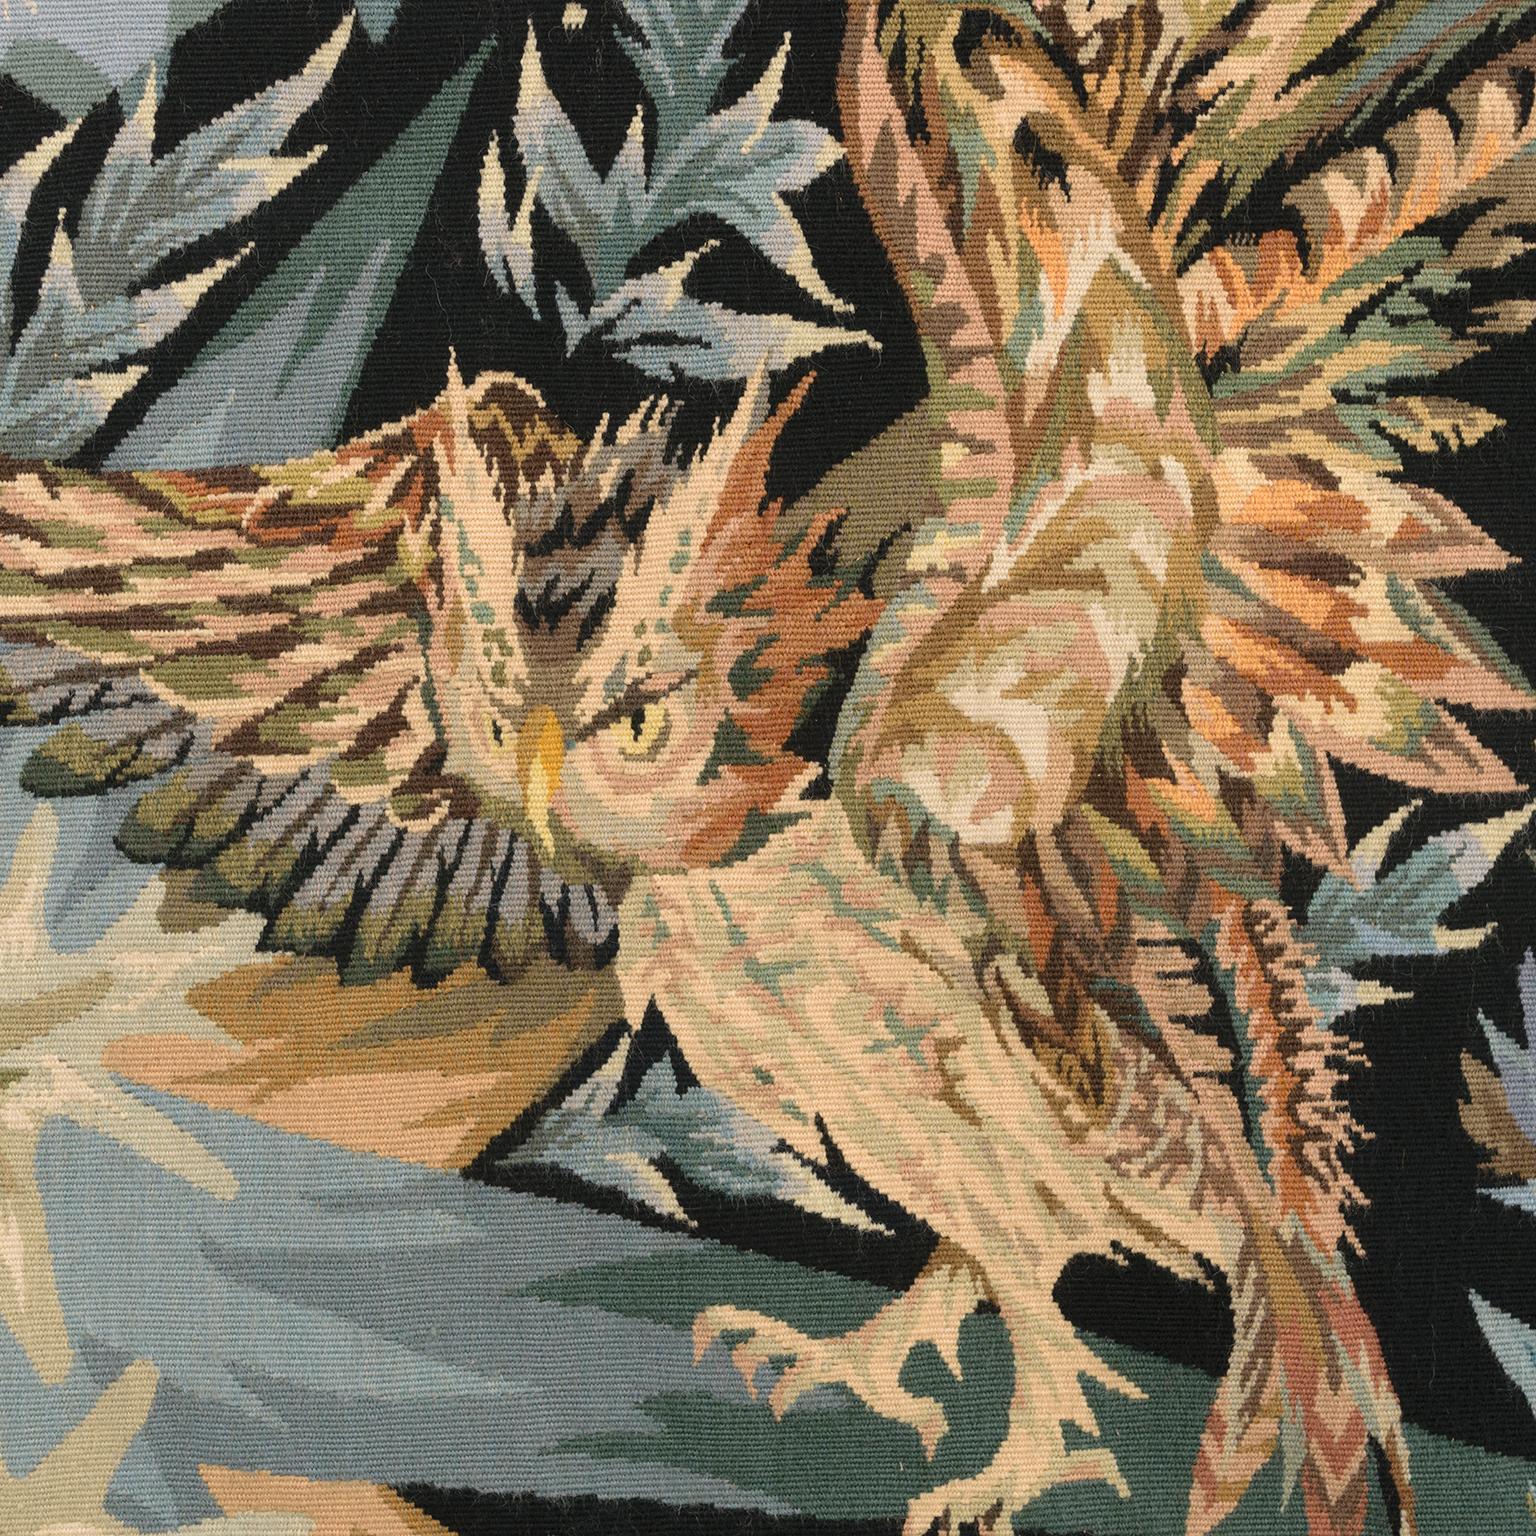 Belgian Delvaux, Belgium Tapestry after Work by Louis Dumont for Gaspart de Wit